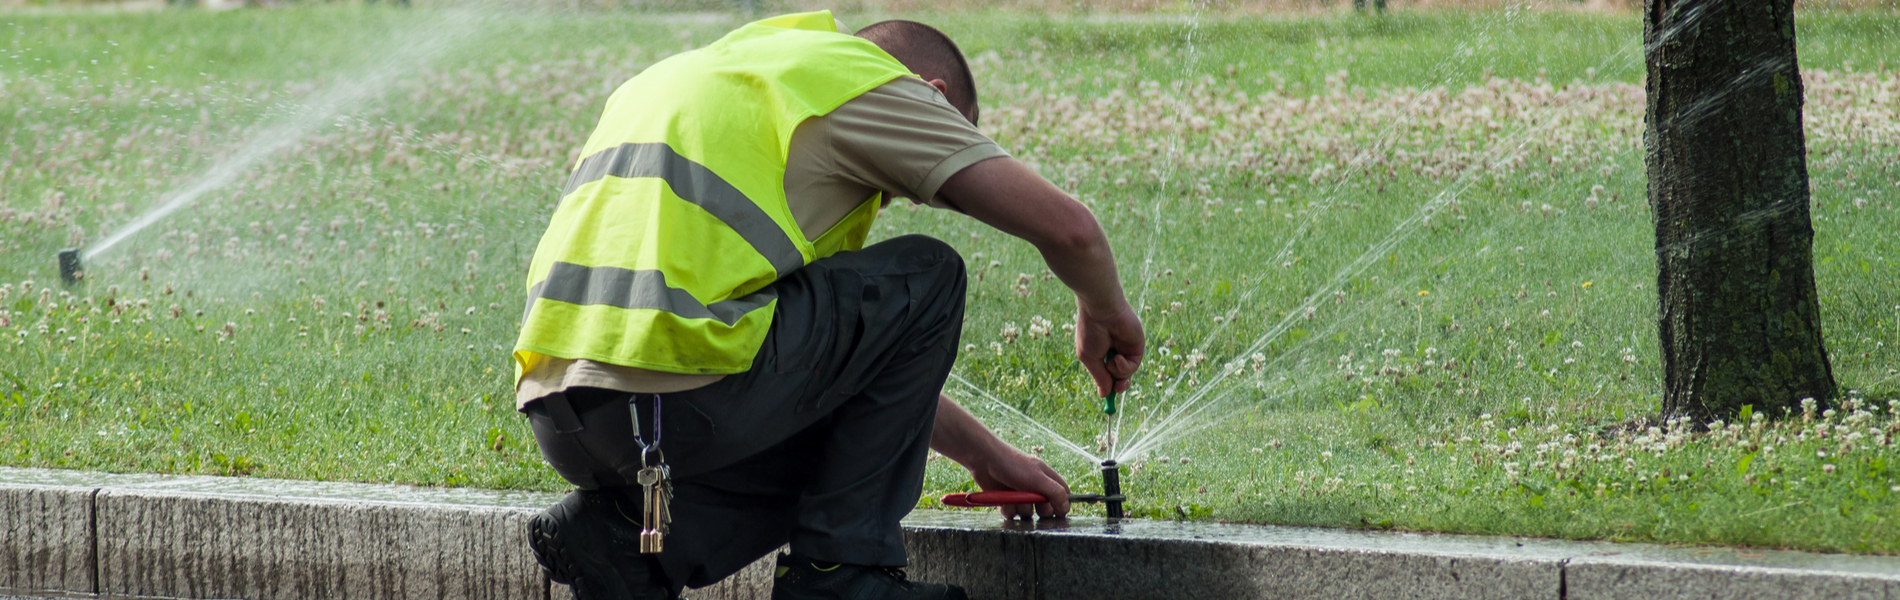 irrigation repair | professional St. Louis irrigation repair services | Lawn Sprinklers St. Louis